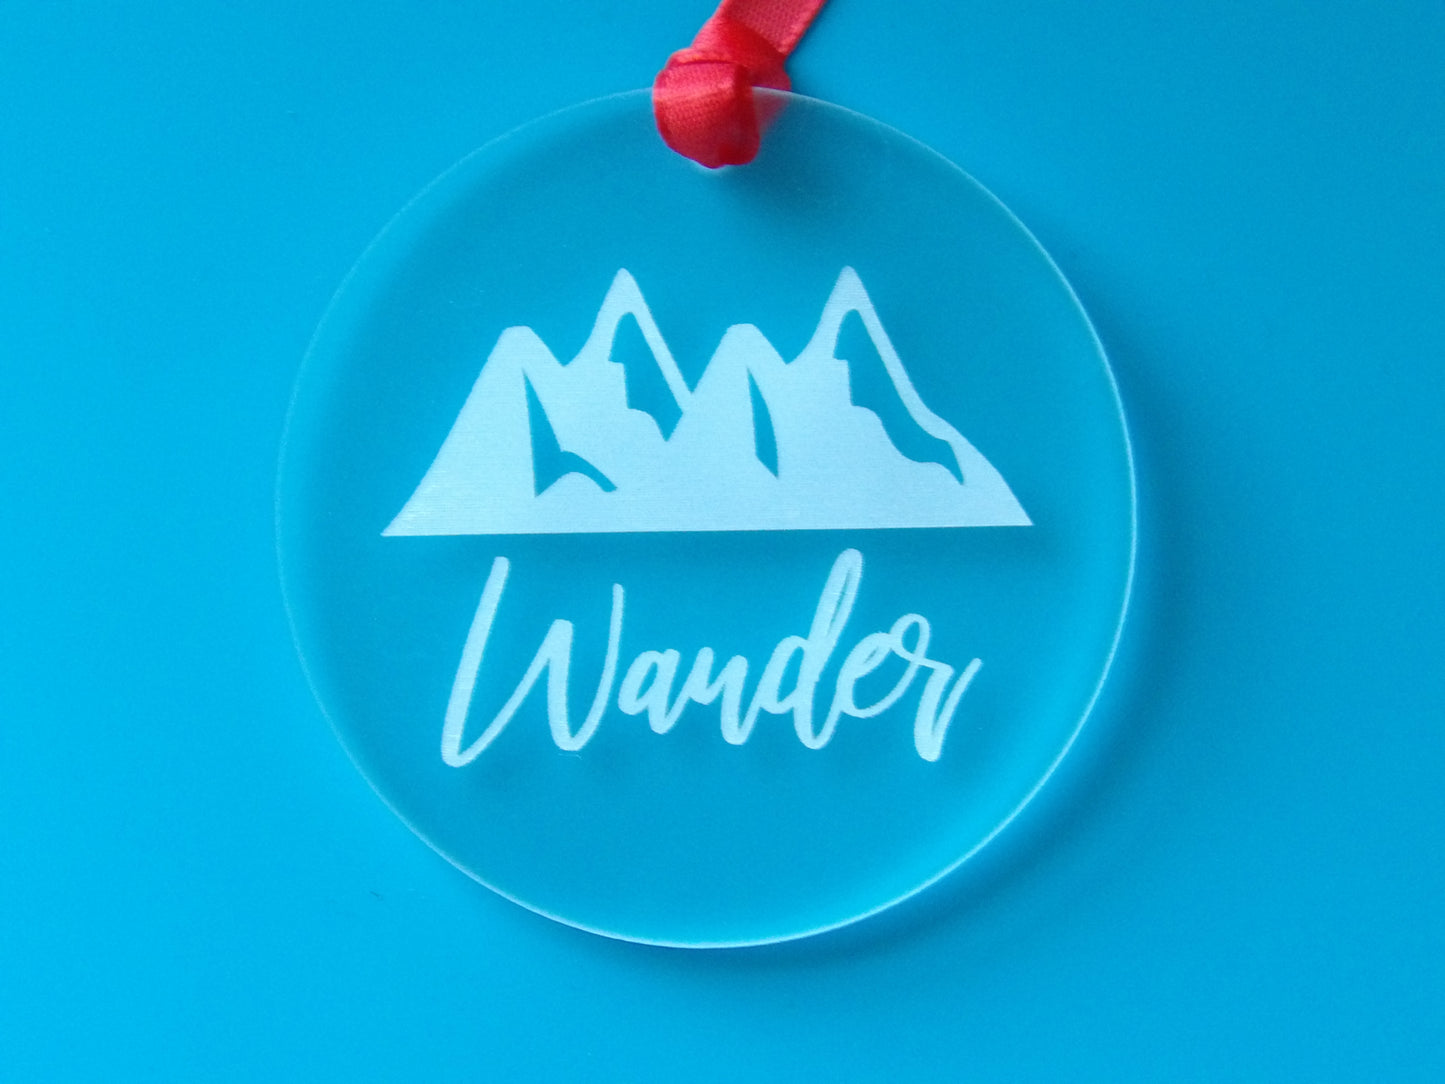 Wander Clear Acrylic Christmas Tree Ornament